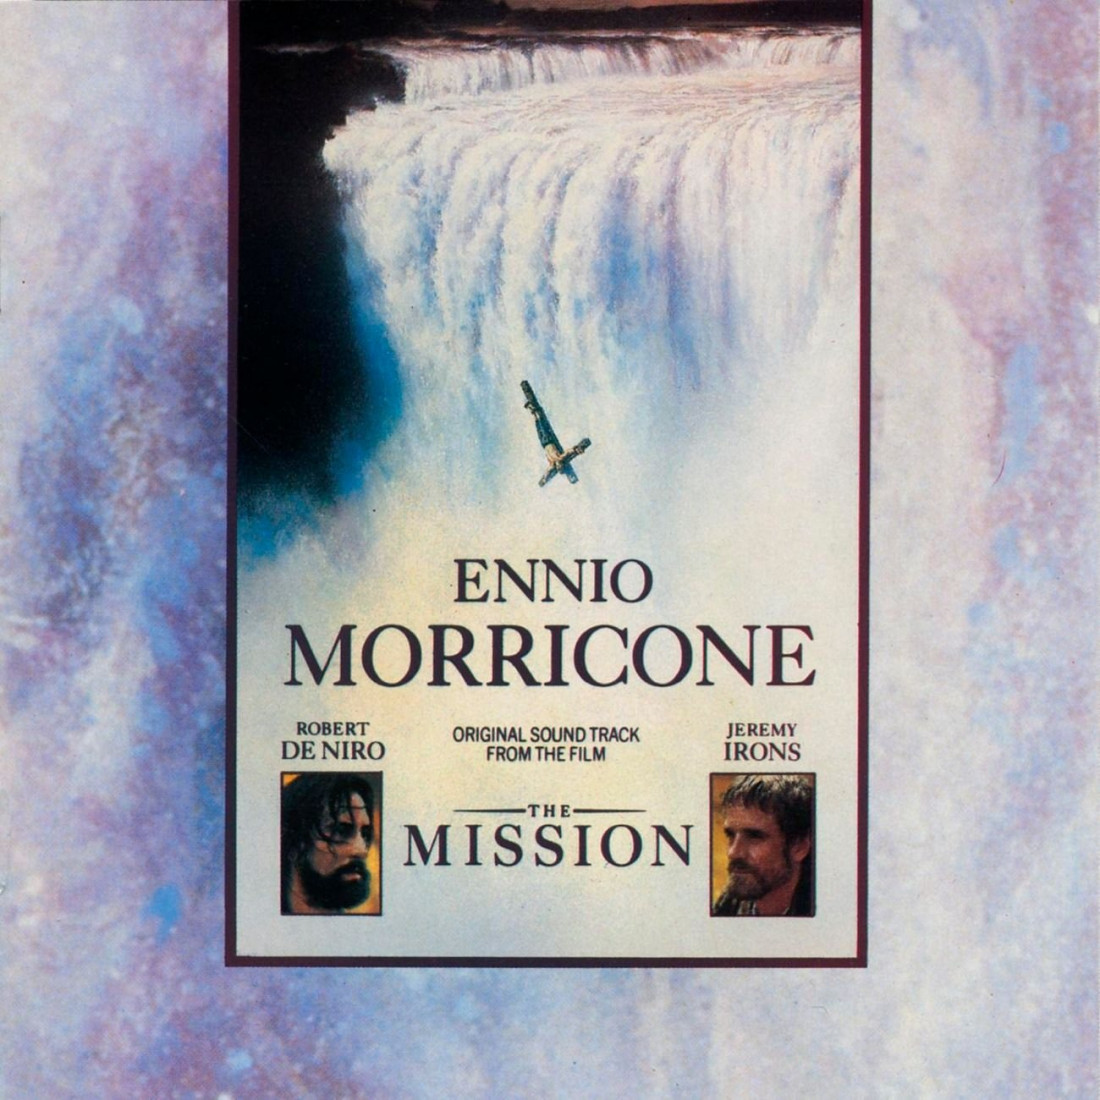 [Ennio Morricone] Gabriel s Oboe (The Mission OST) Photo-Image